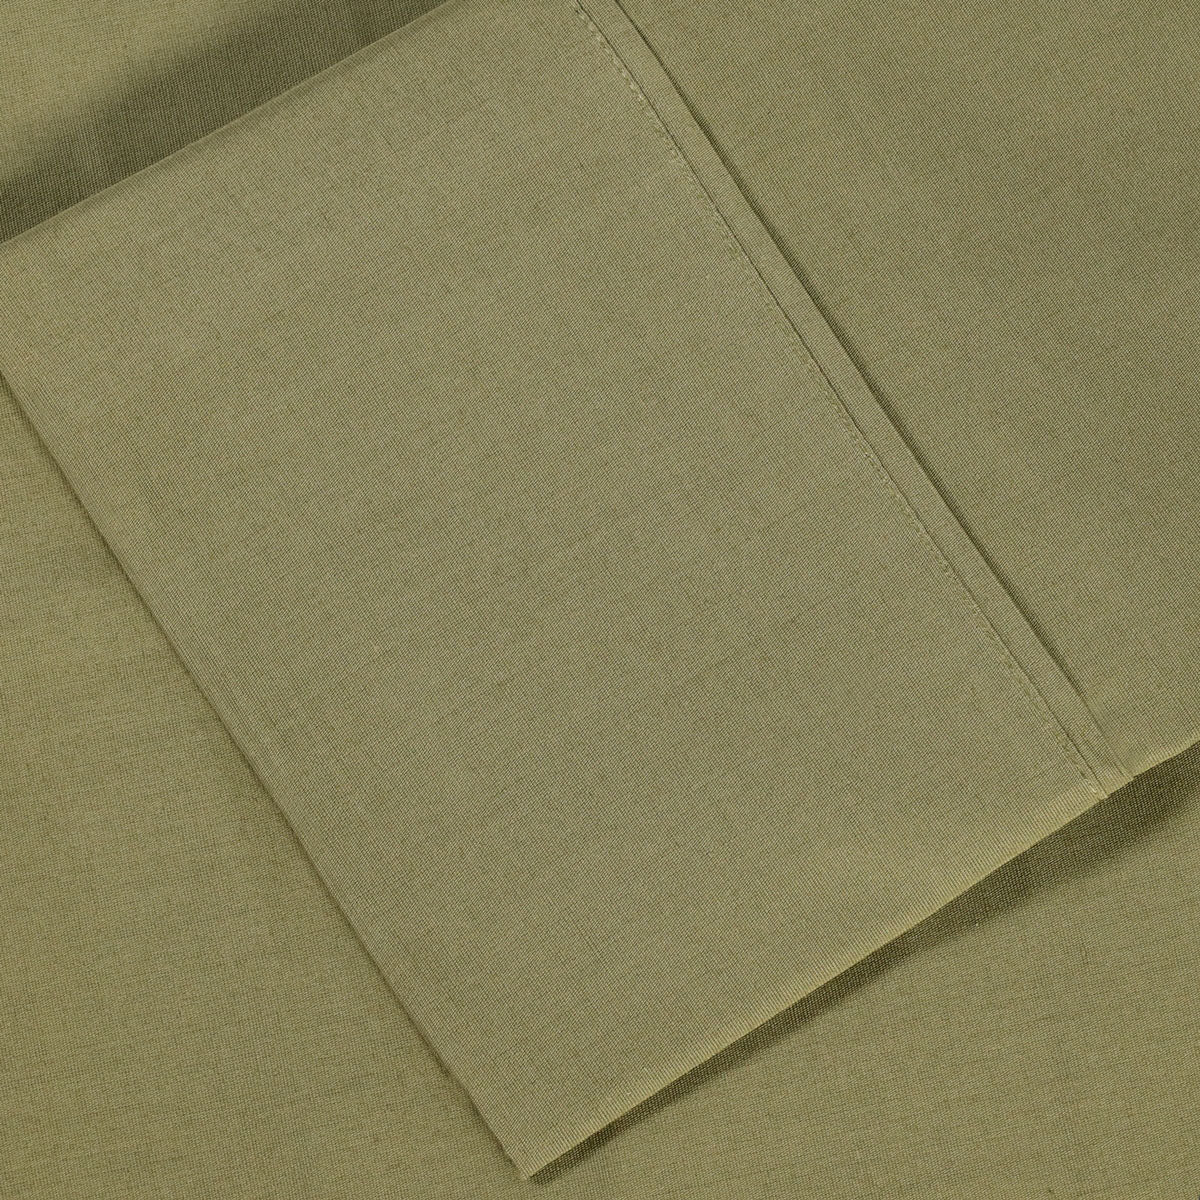 Solid Cotton Percale 2-Piece Pillowcase Set - Sage